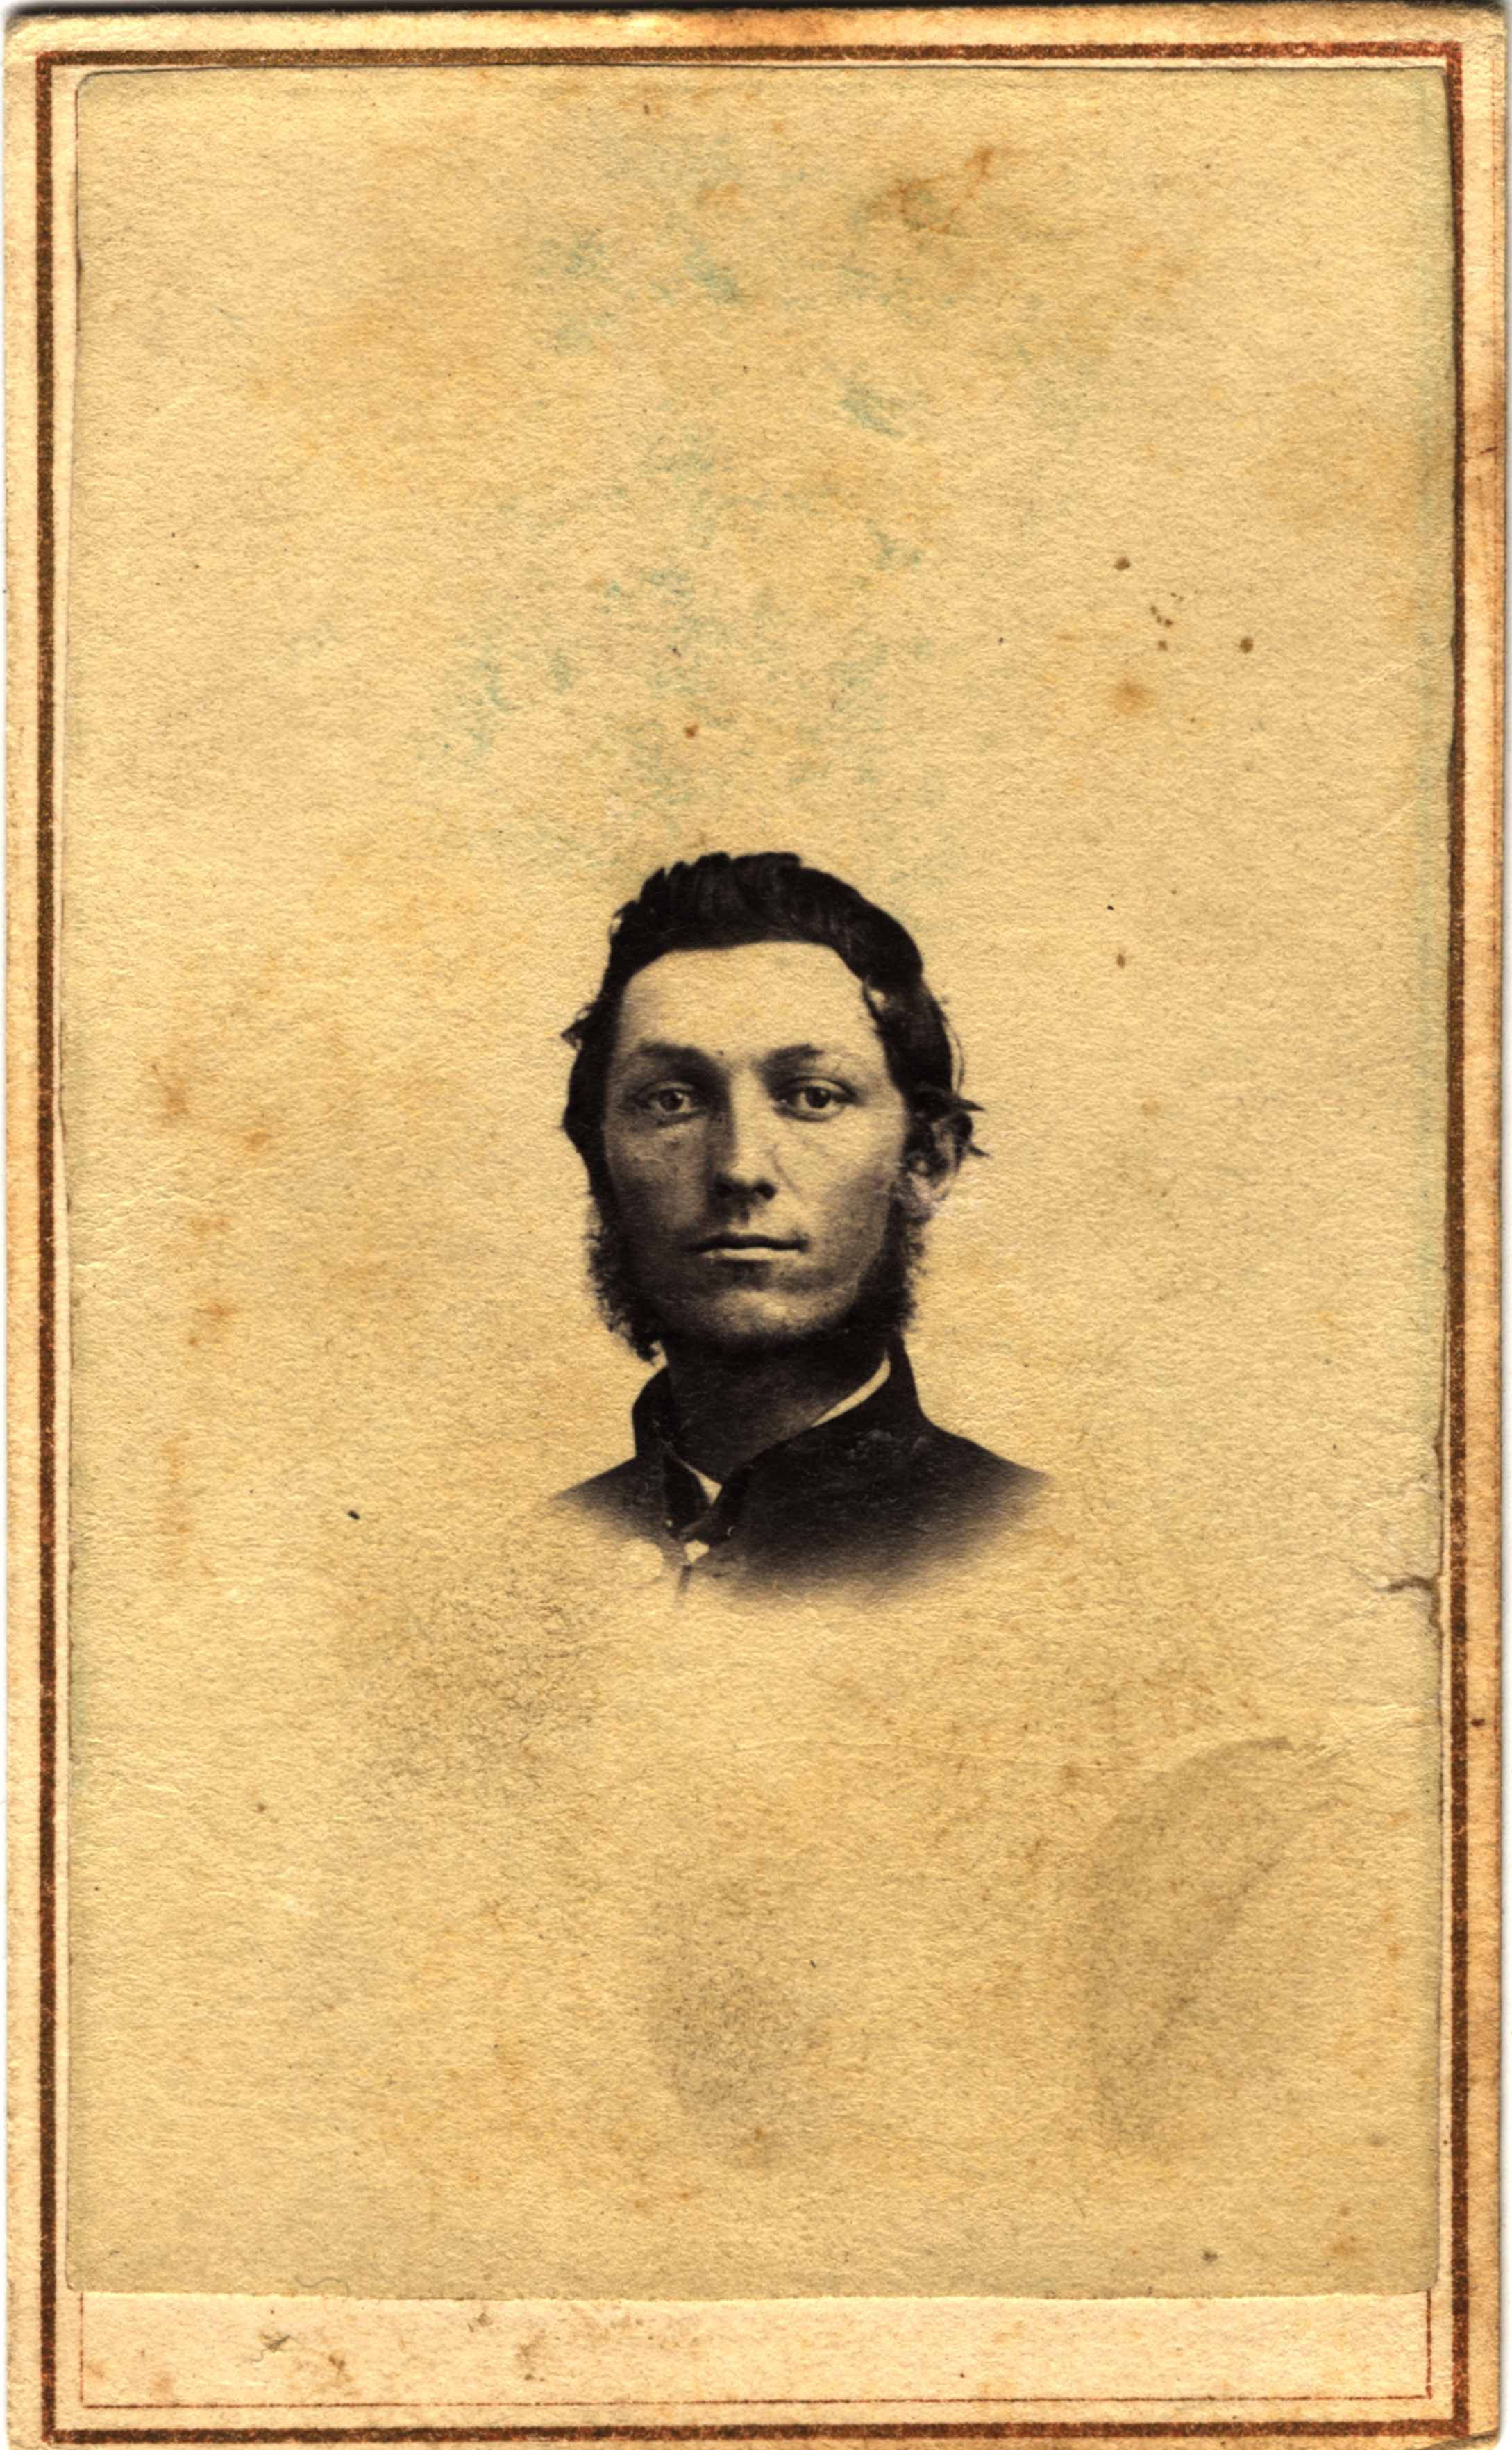 Unidentified Man, circa 1860s